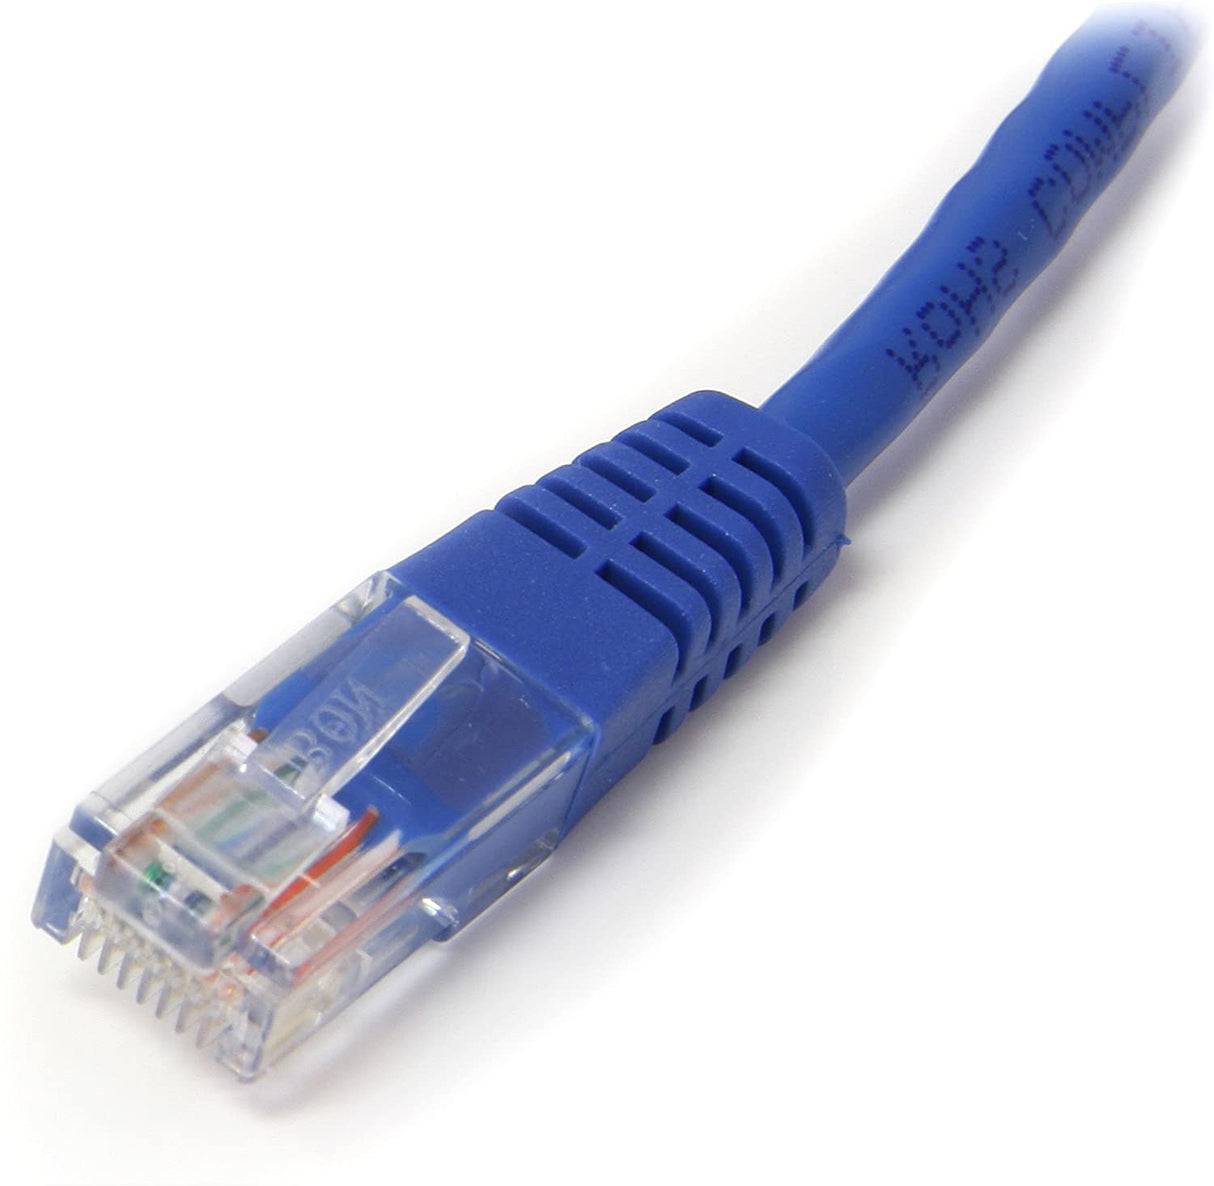 StarTech.com Cat5e Ethernet Cable - 5 ft - Blue - Patch Cable - Molded Cat5e Cable - Short Network Cable - Ethernet Cord - Cat 5e Cable - 5ft (M45PATCH5BL) 5 ft / 1.5m Blue